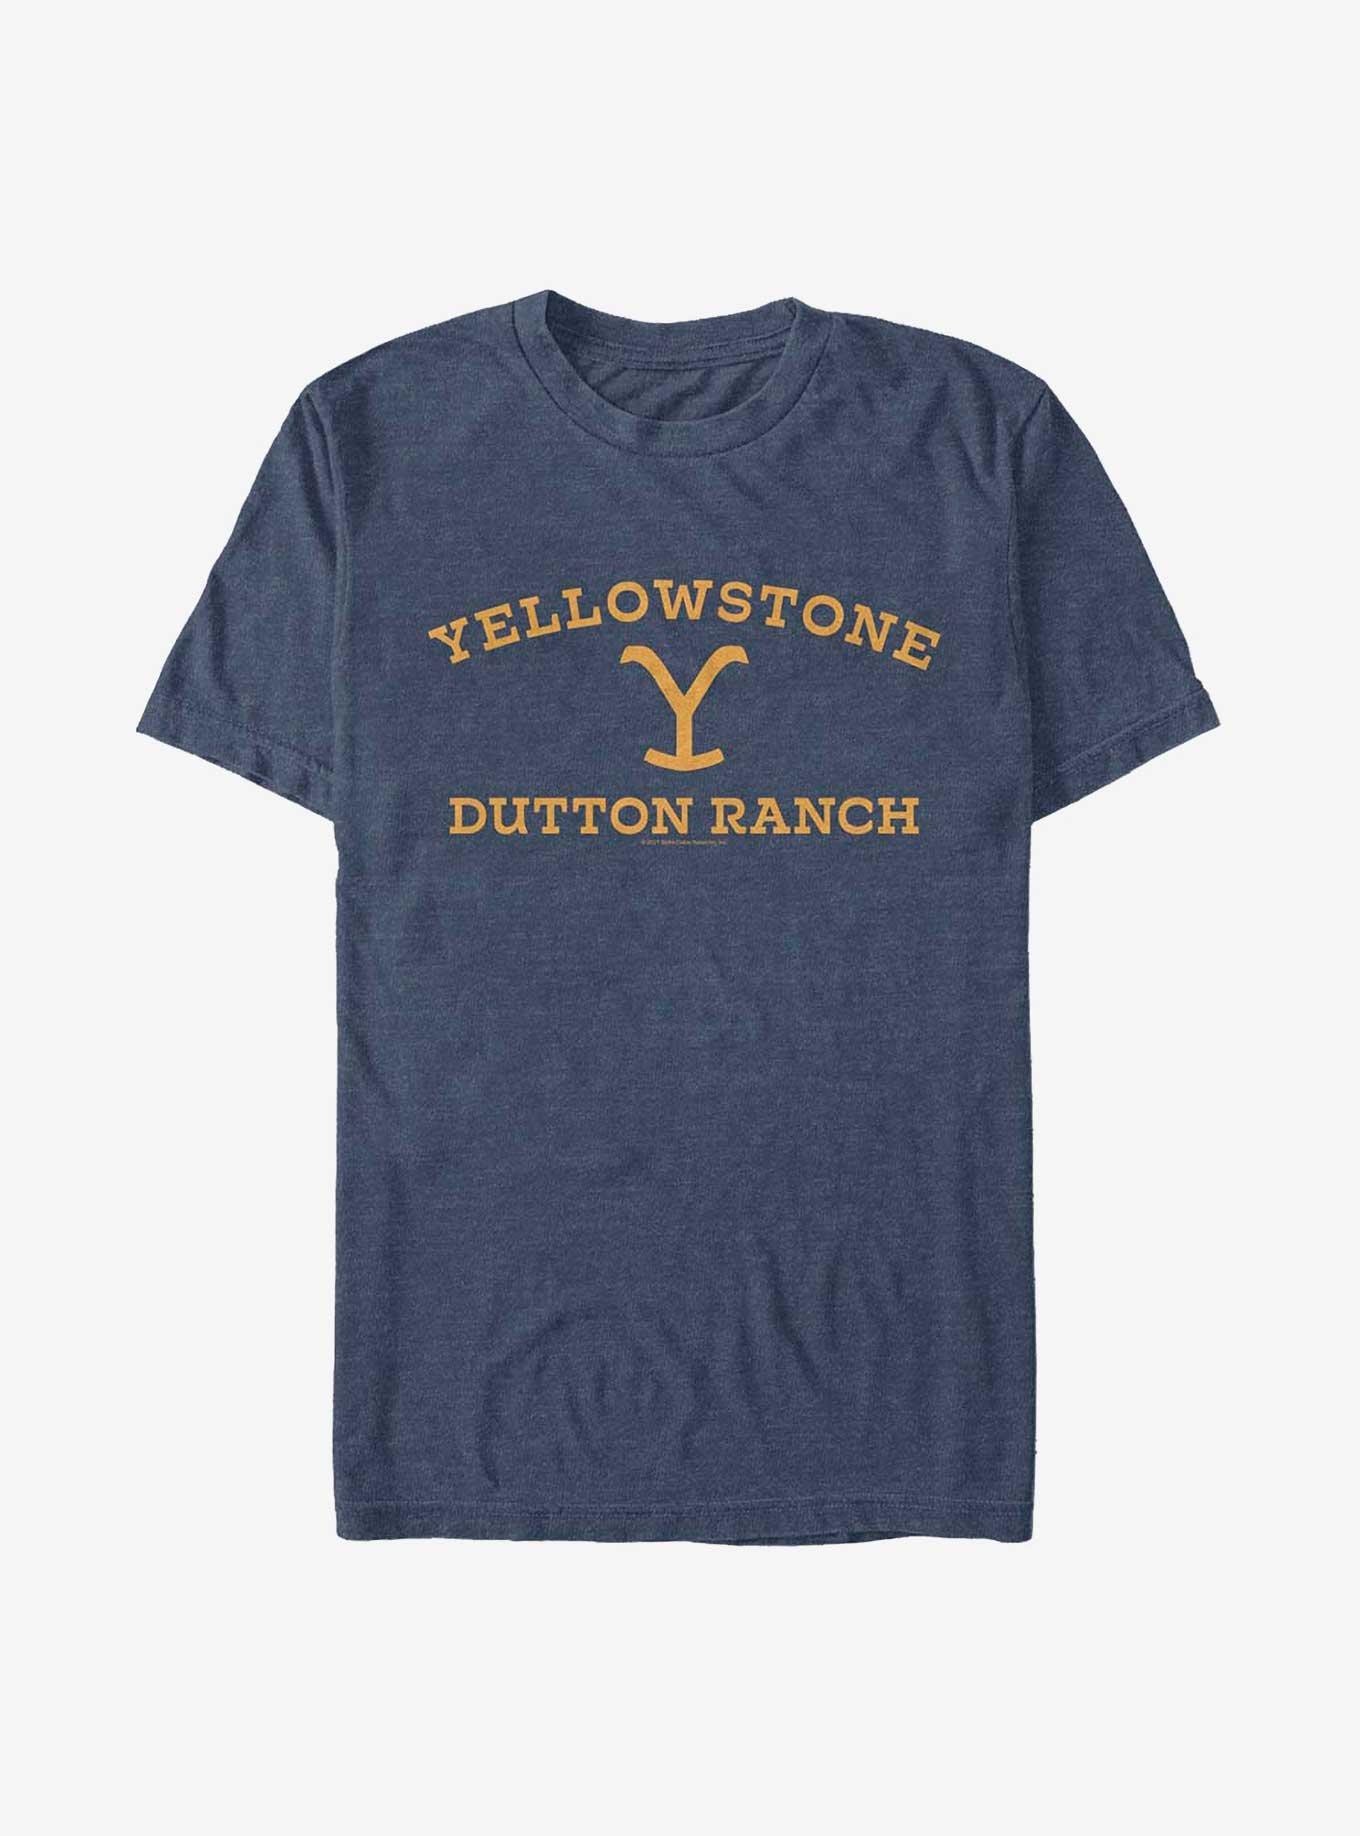 Yellowstone Dutton Ranch Logo T-Shirt, NAVY HTR, hi-res